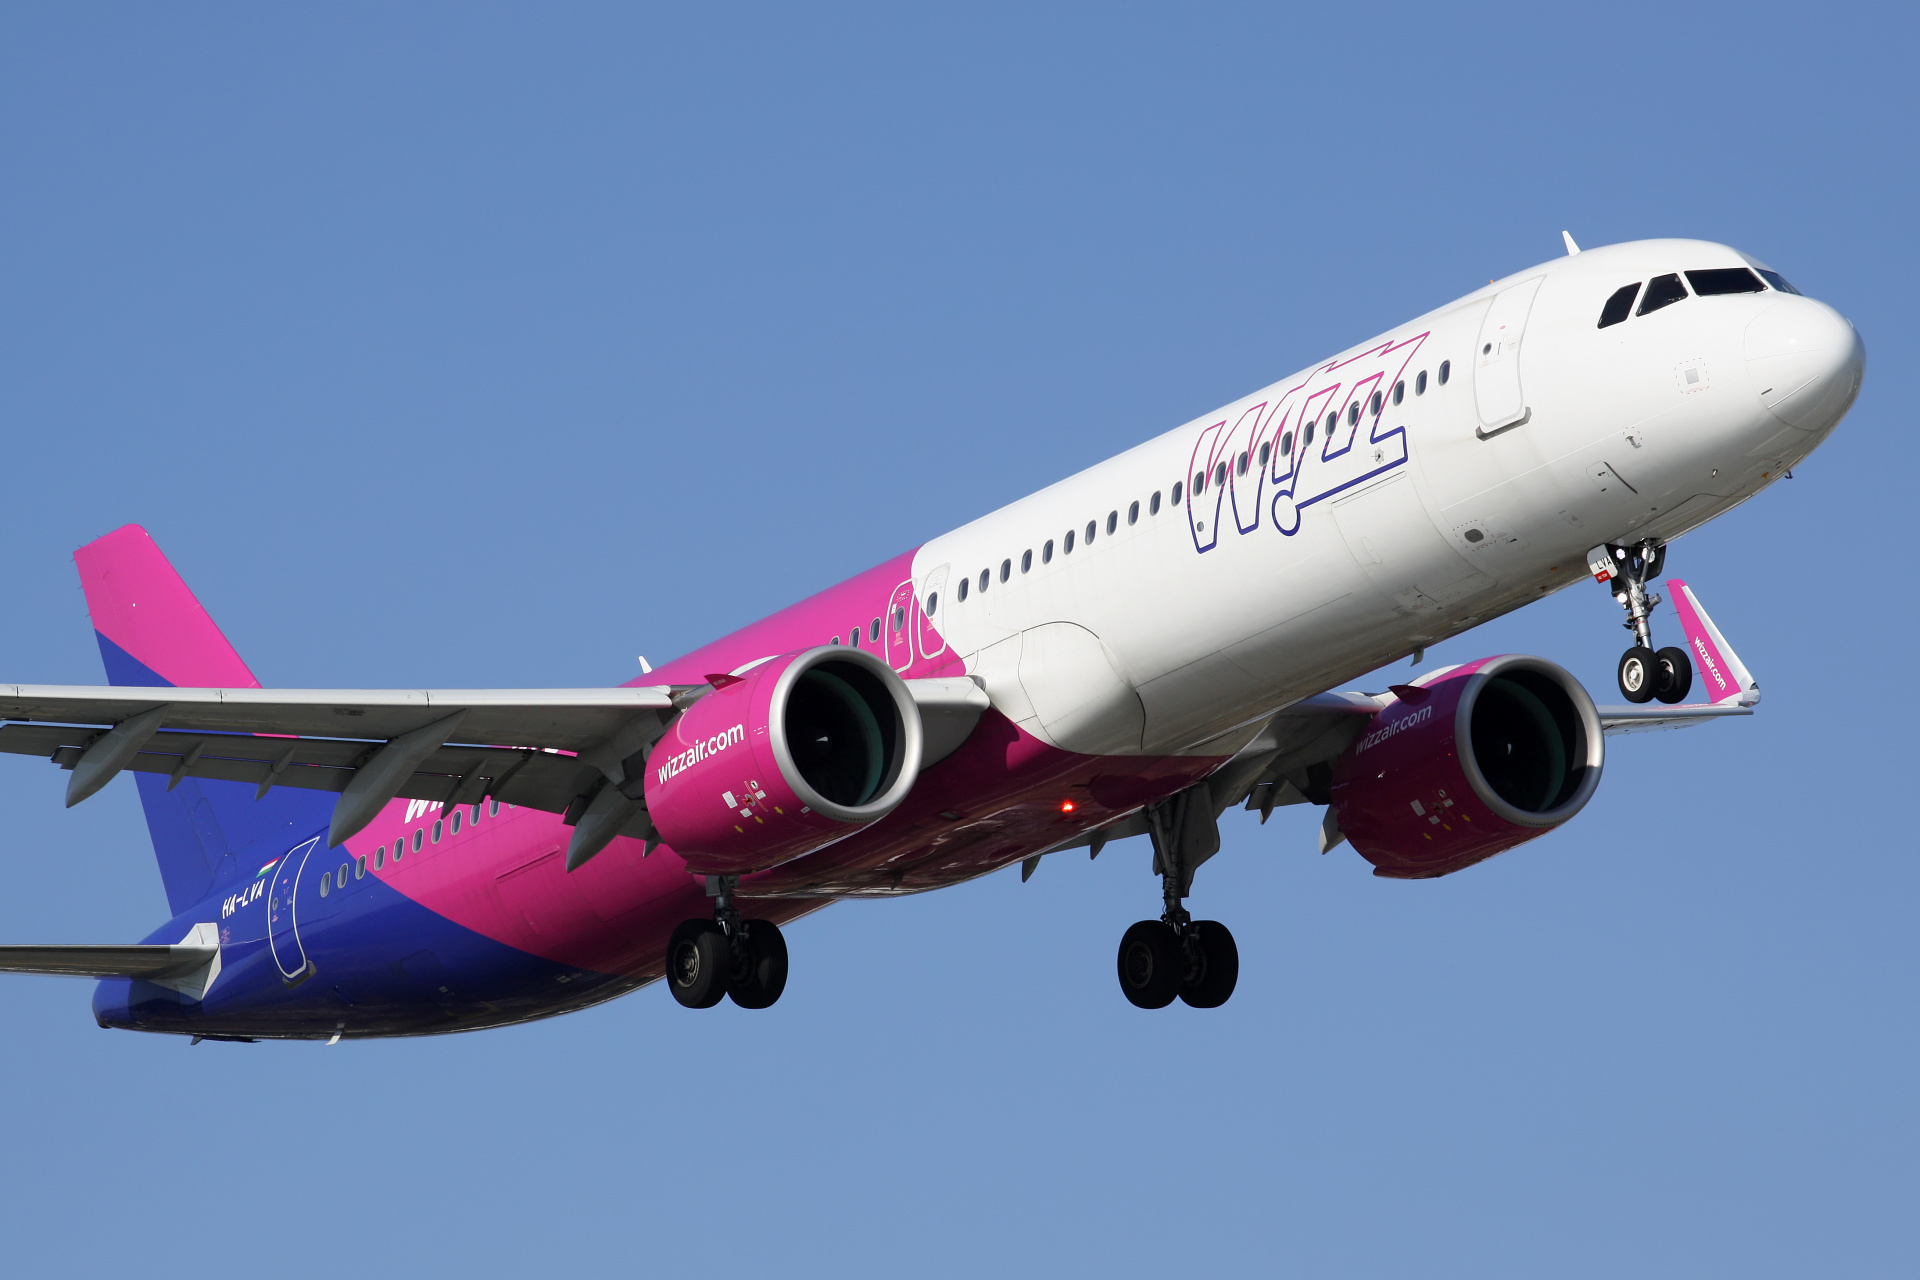 HA-LVA (Aircraft » EPWA Spotting » Airbus A321neo » Wizz Air)